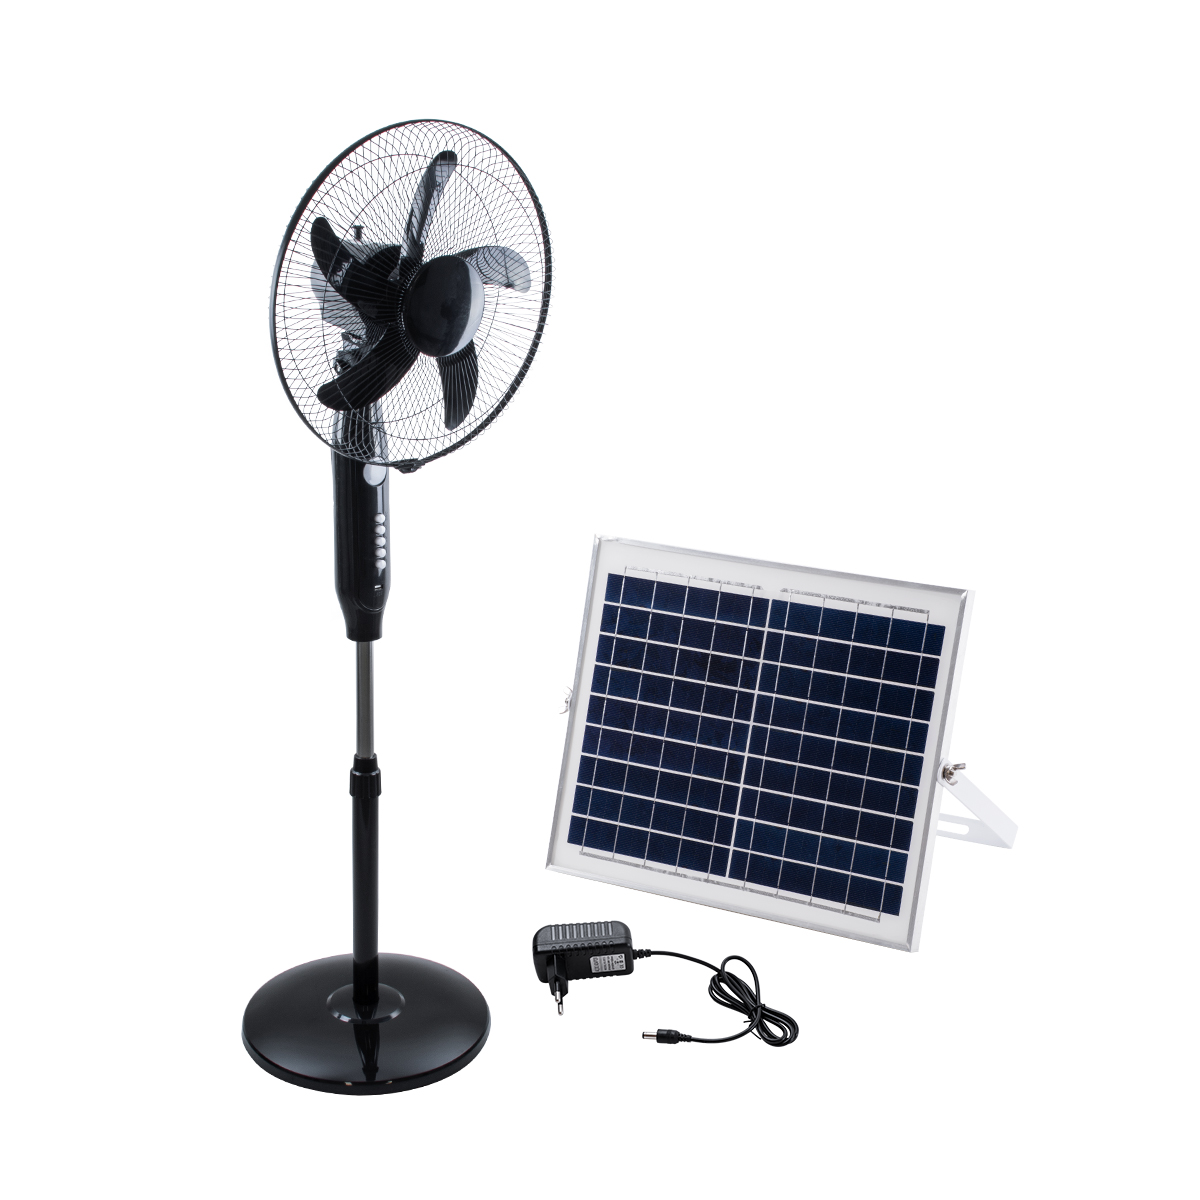 GloboStar® SOLARA-FAN 85356 Solar Fan Αυτόνομος Ηλιακός Επιδαπέδιος Ανεμιστήρας 25W 2 Λειτουργιών Ρεύματος με AC 220-240V ή με Φωτοβολταϊκό Panel 9V 12W & Επαναφορτιζόμενη Μπαταρία Li-ion 7.4V 4400mAh – 3 Ταχύτητες – Ενσωματωμένο USB 2.0 Charger Συσκευών – IP20 – Μ44 x Π37.5 x Υ132cm – Μαύρο – 2 Years Warranty